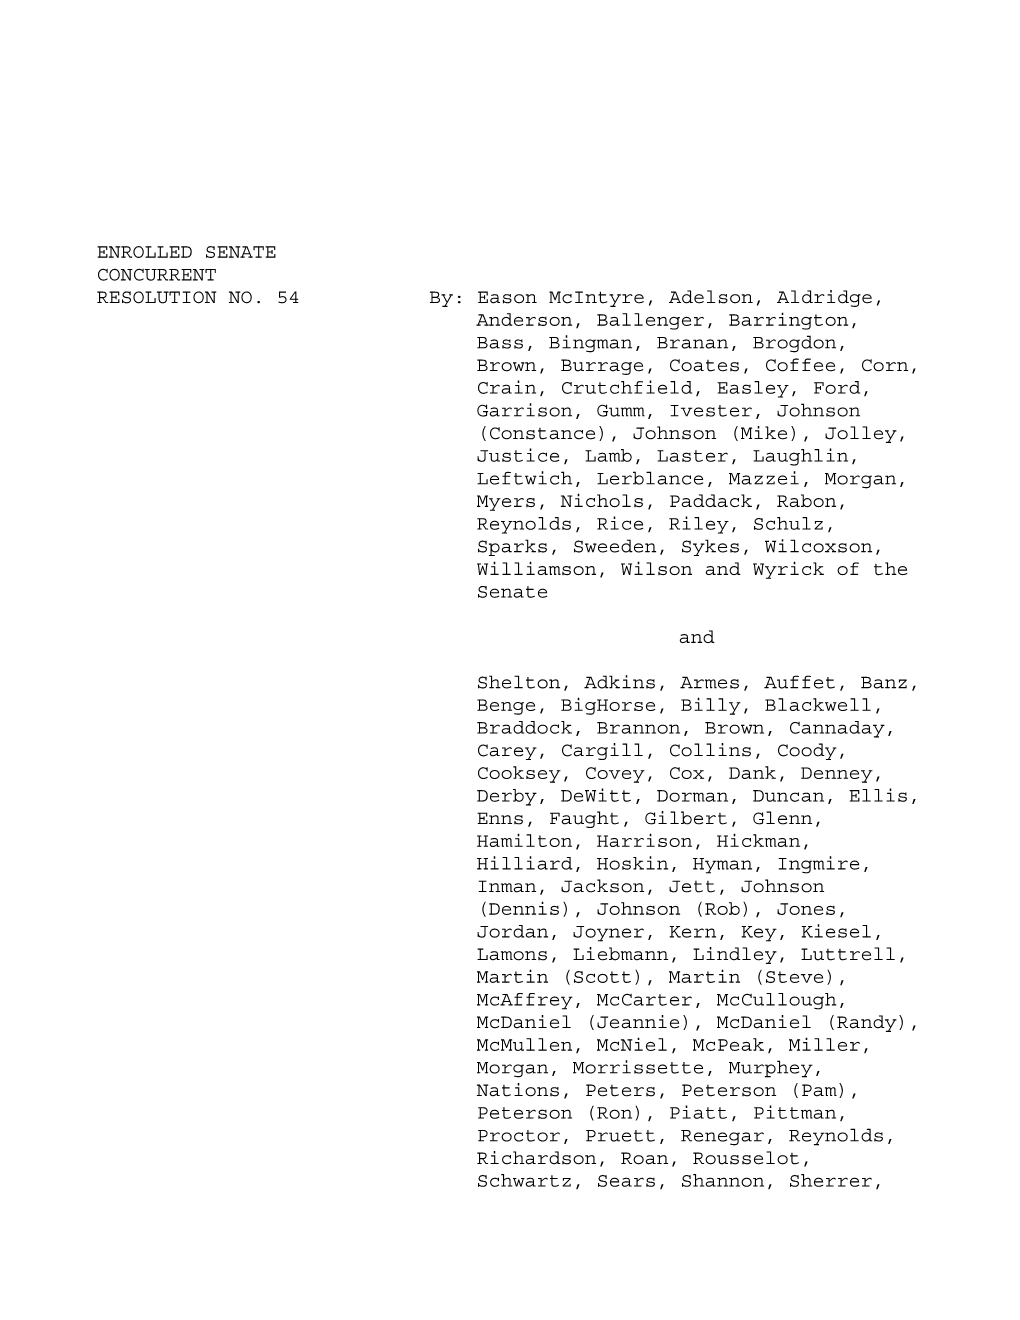 Enrolled Senate Concurrent Resolution No